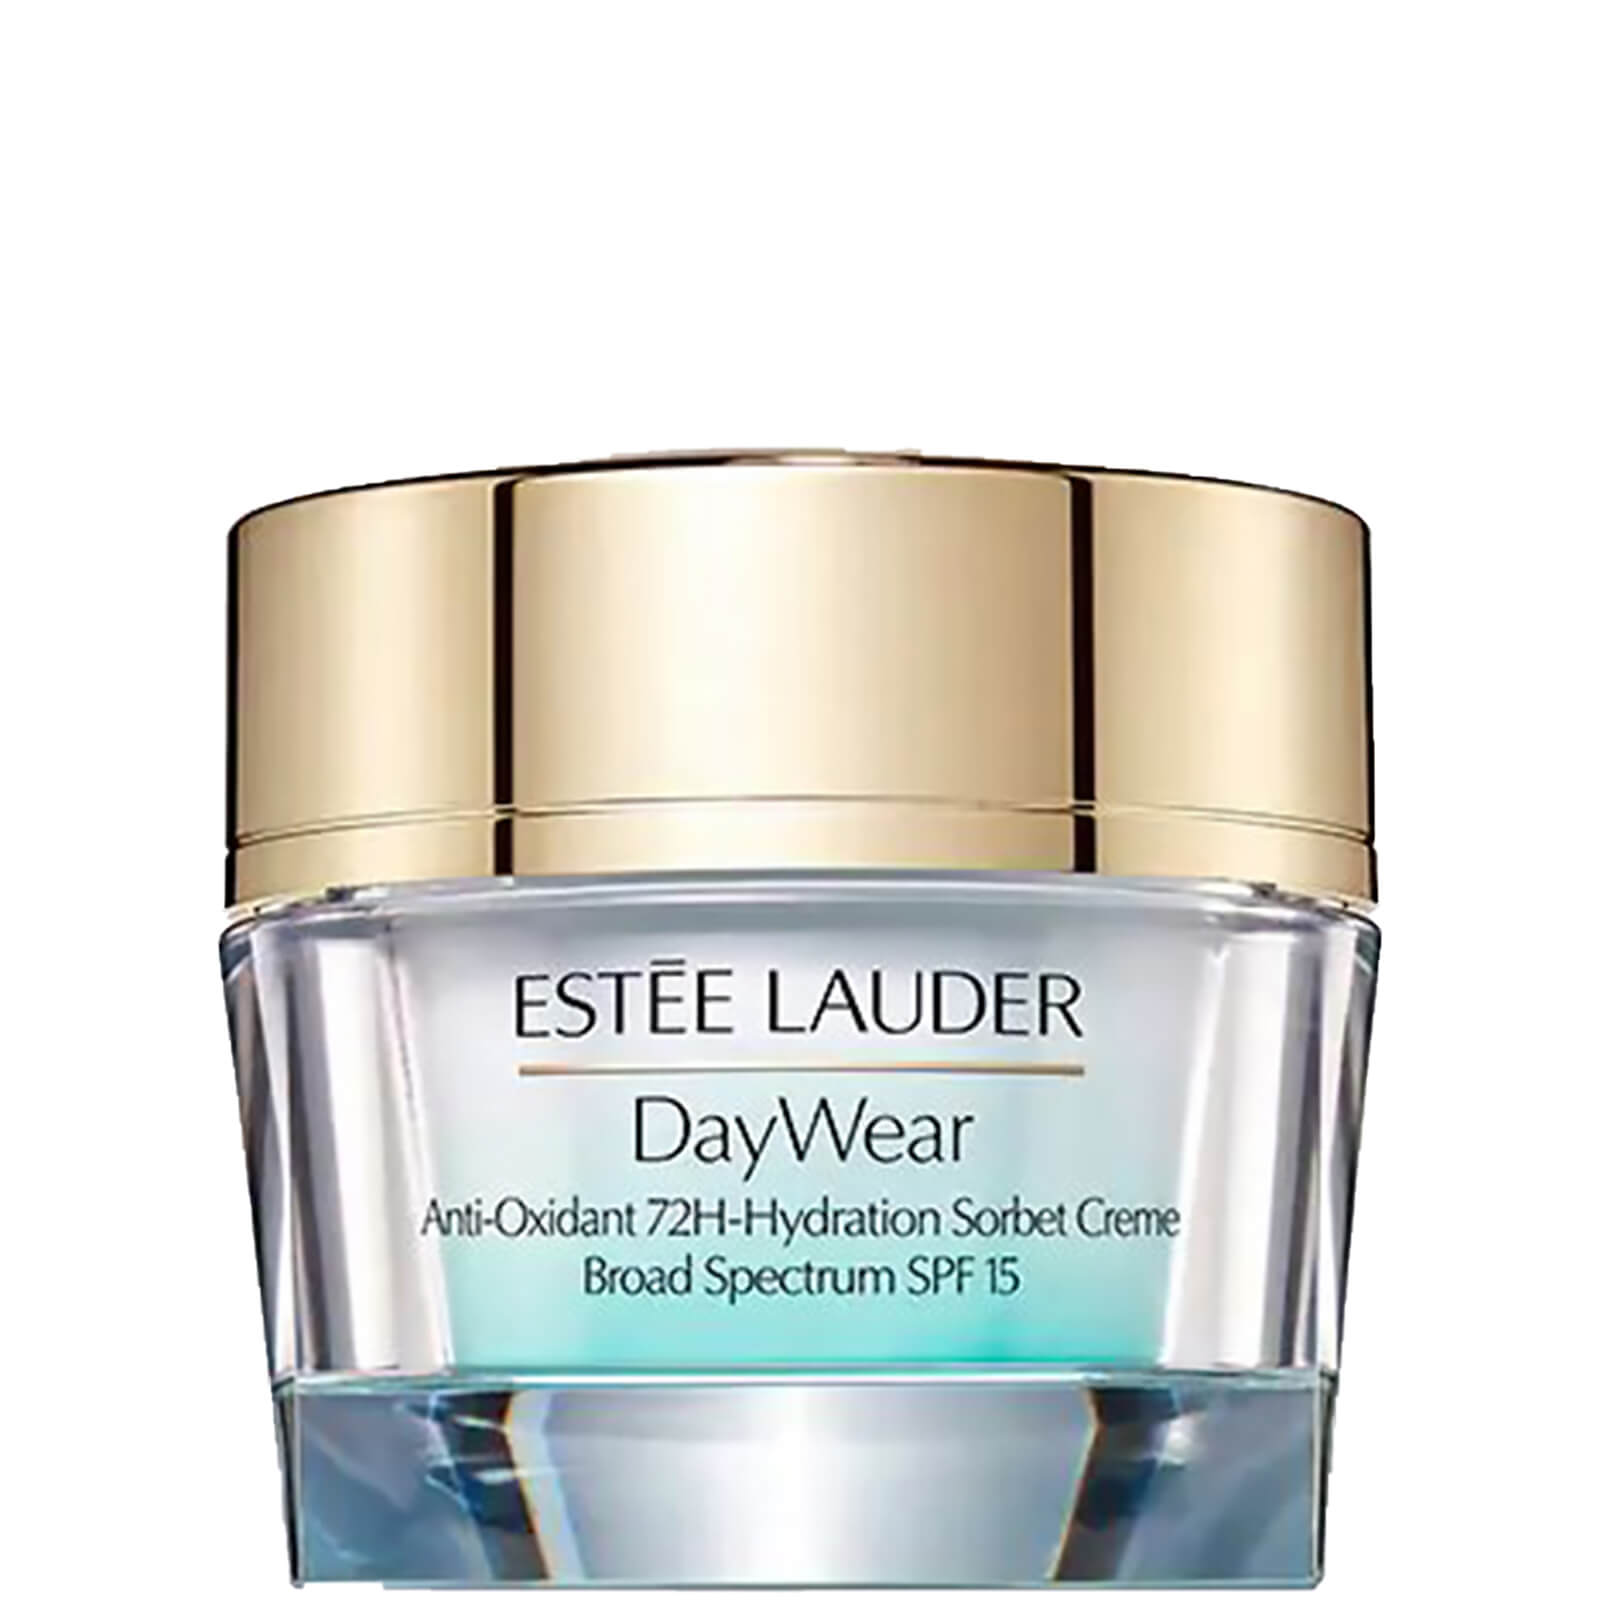 Image of Estée Lauder DayWear Anti-Oxidant 72H-Hydration Sorbet Creme SPF 15 15ml